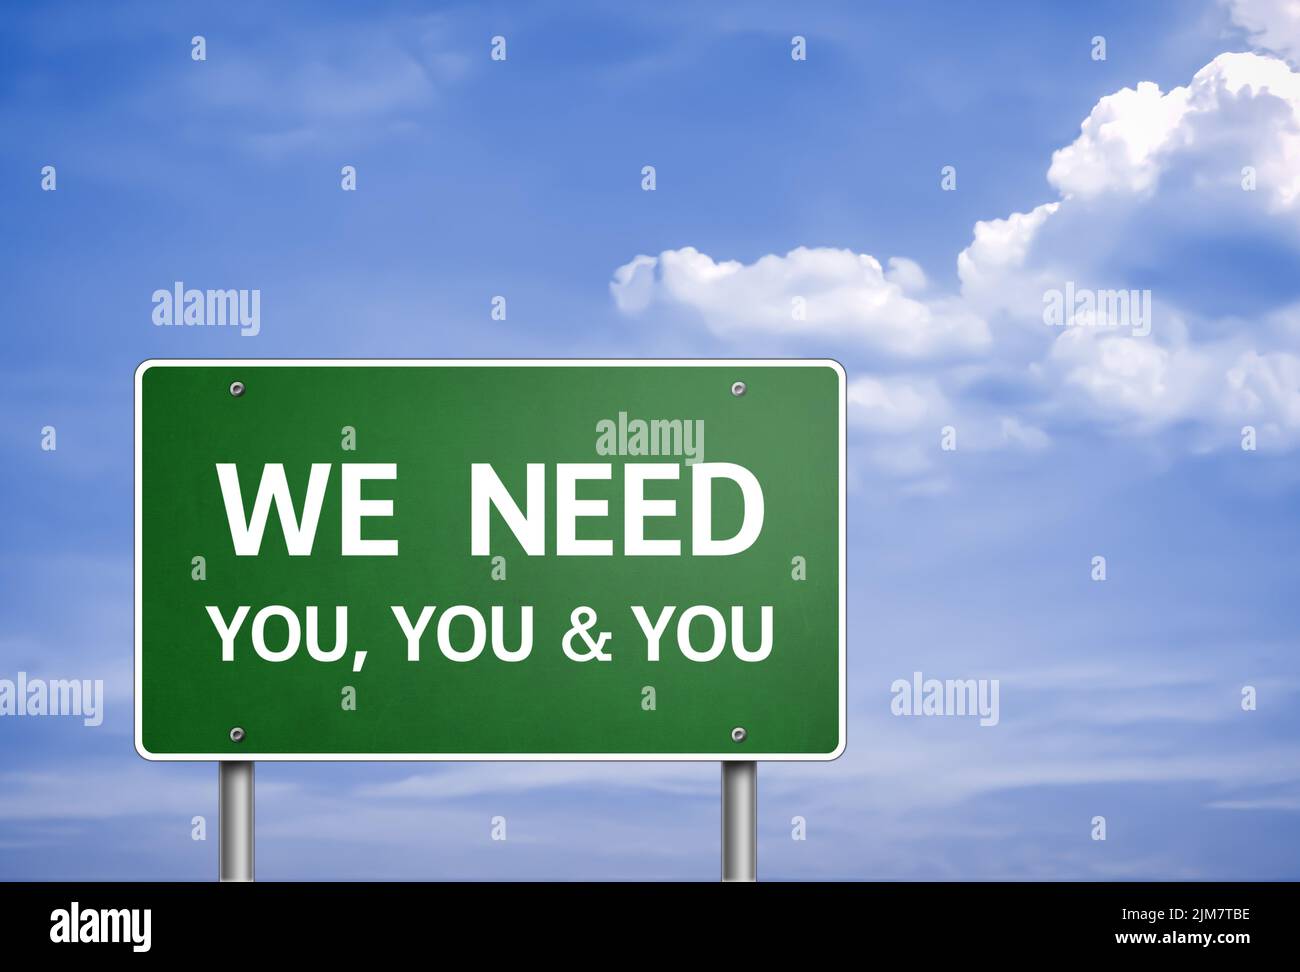 We need you - job search Stock Photo